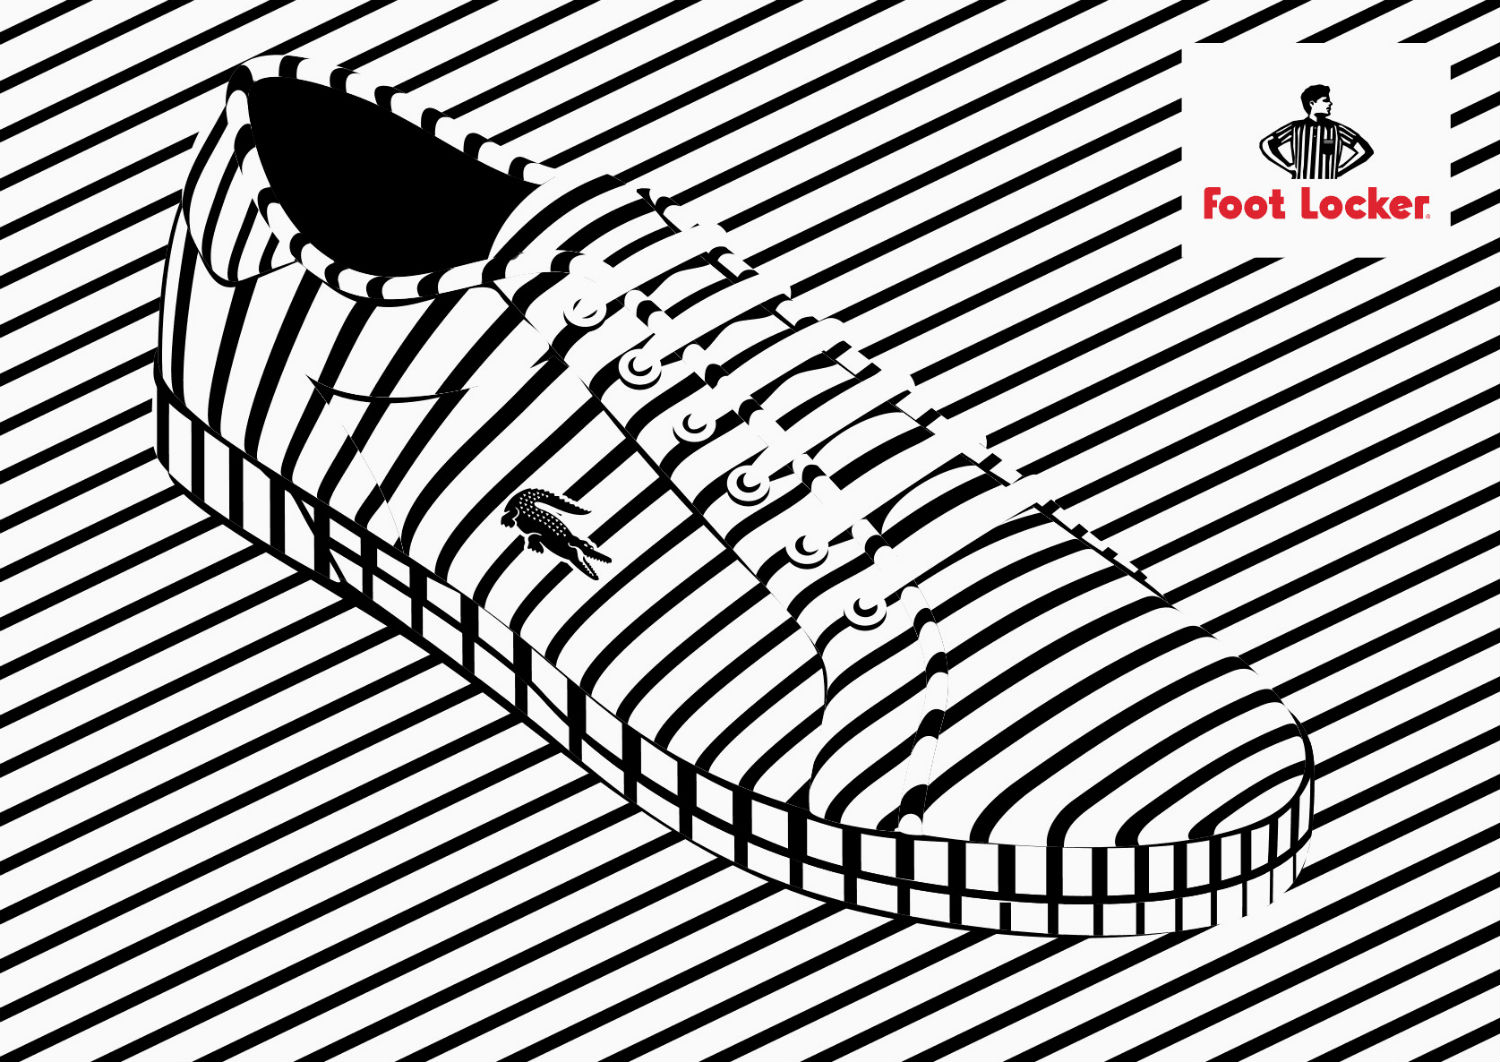 alex trochut black white illusion illustration foot locker lacoste